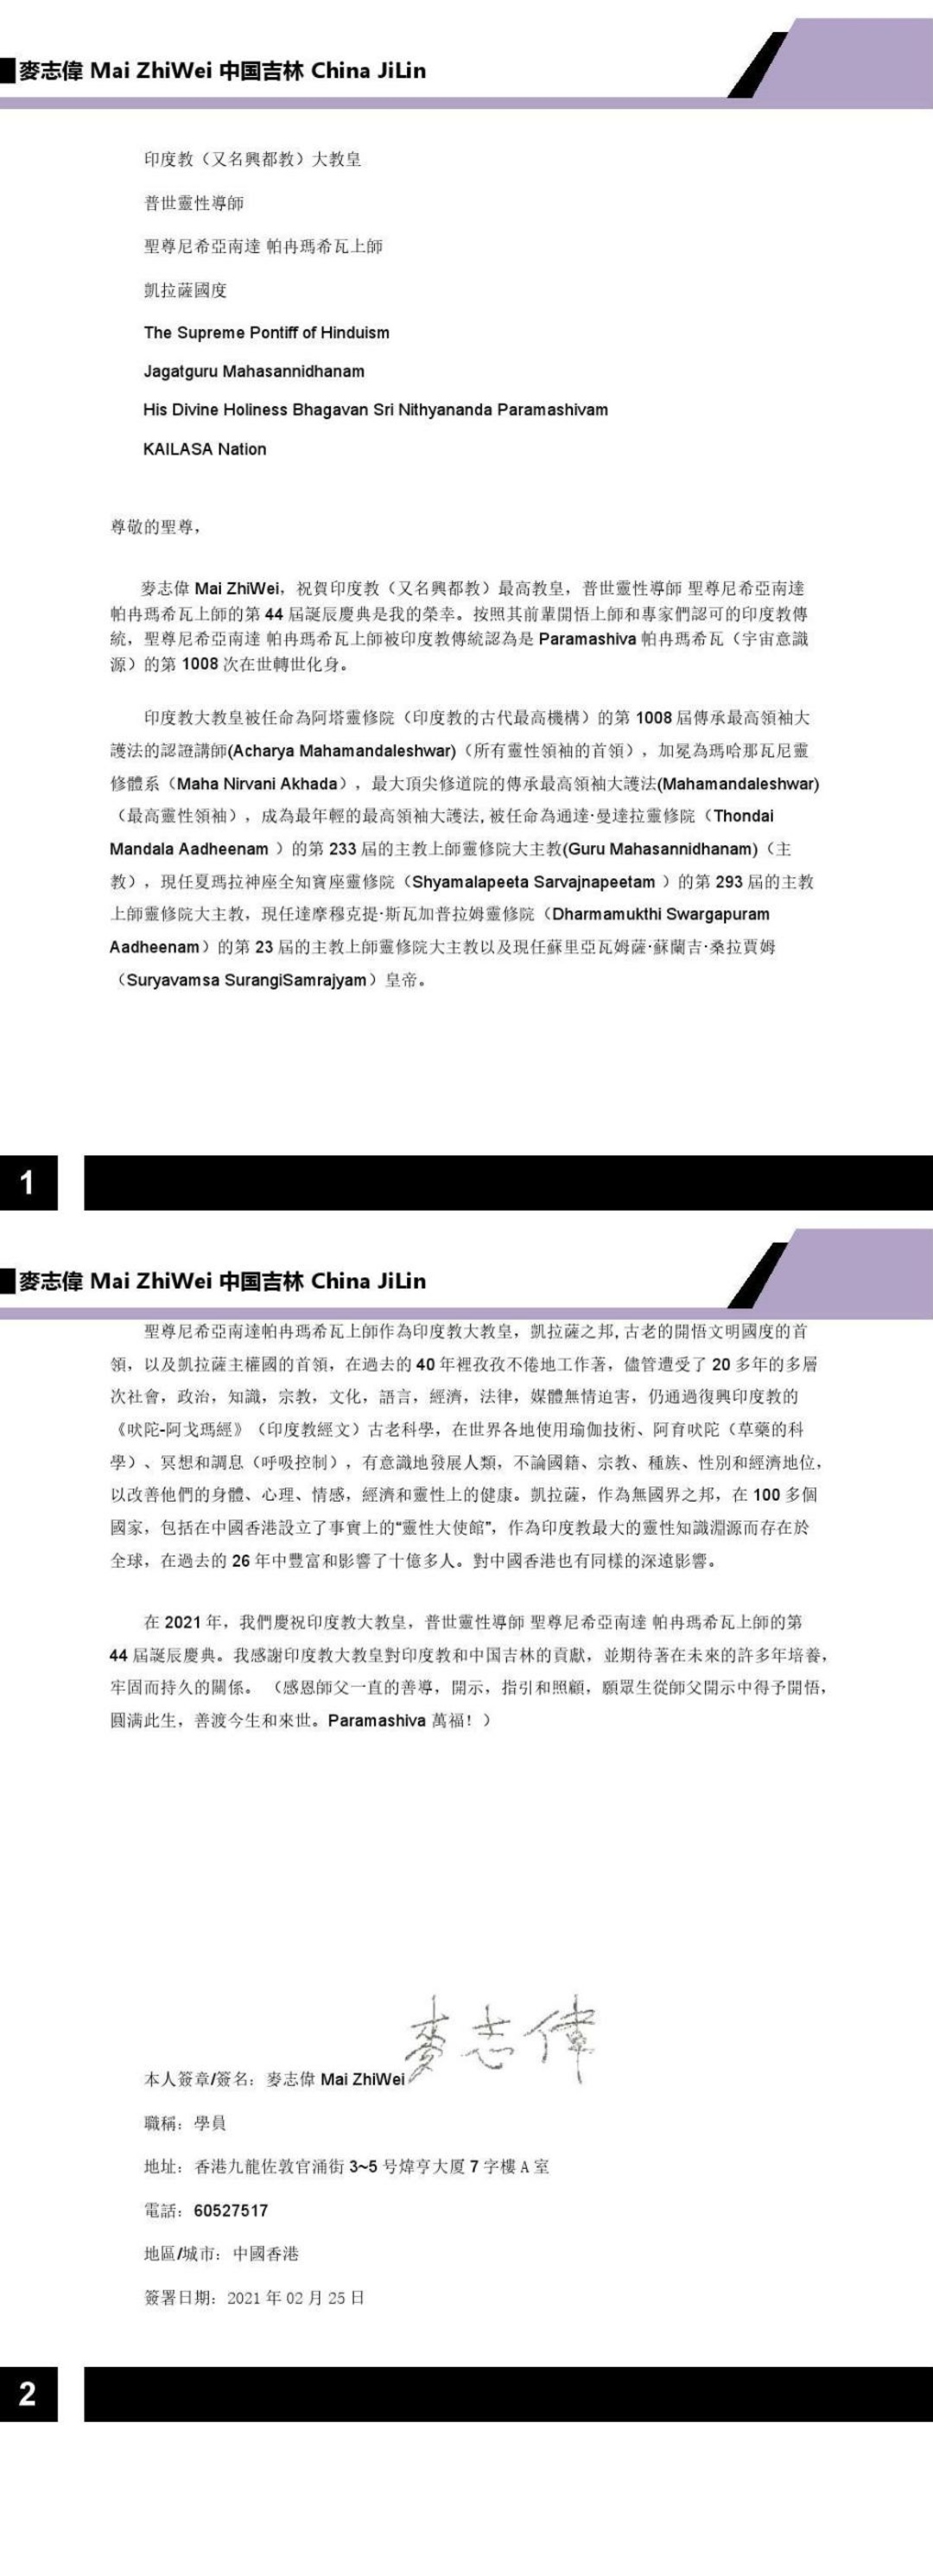 China---Mai-Zhi-Wei---Feb-25--2021-(Proclamation)-1O-co WVtyzz7vLJVNTeby8aEGcViKrBs.pdf